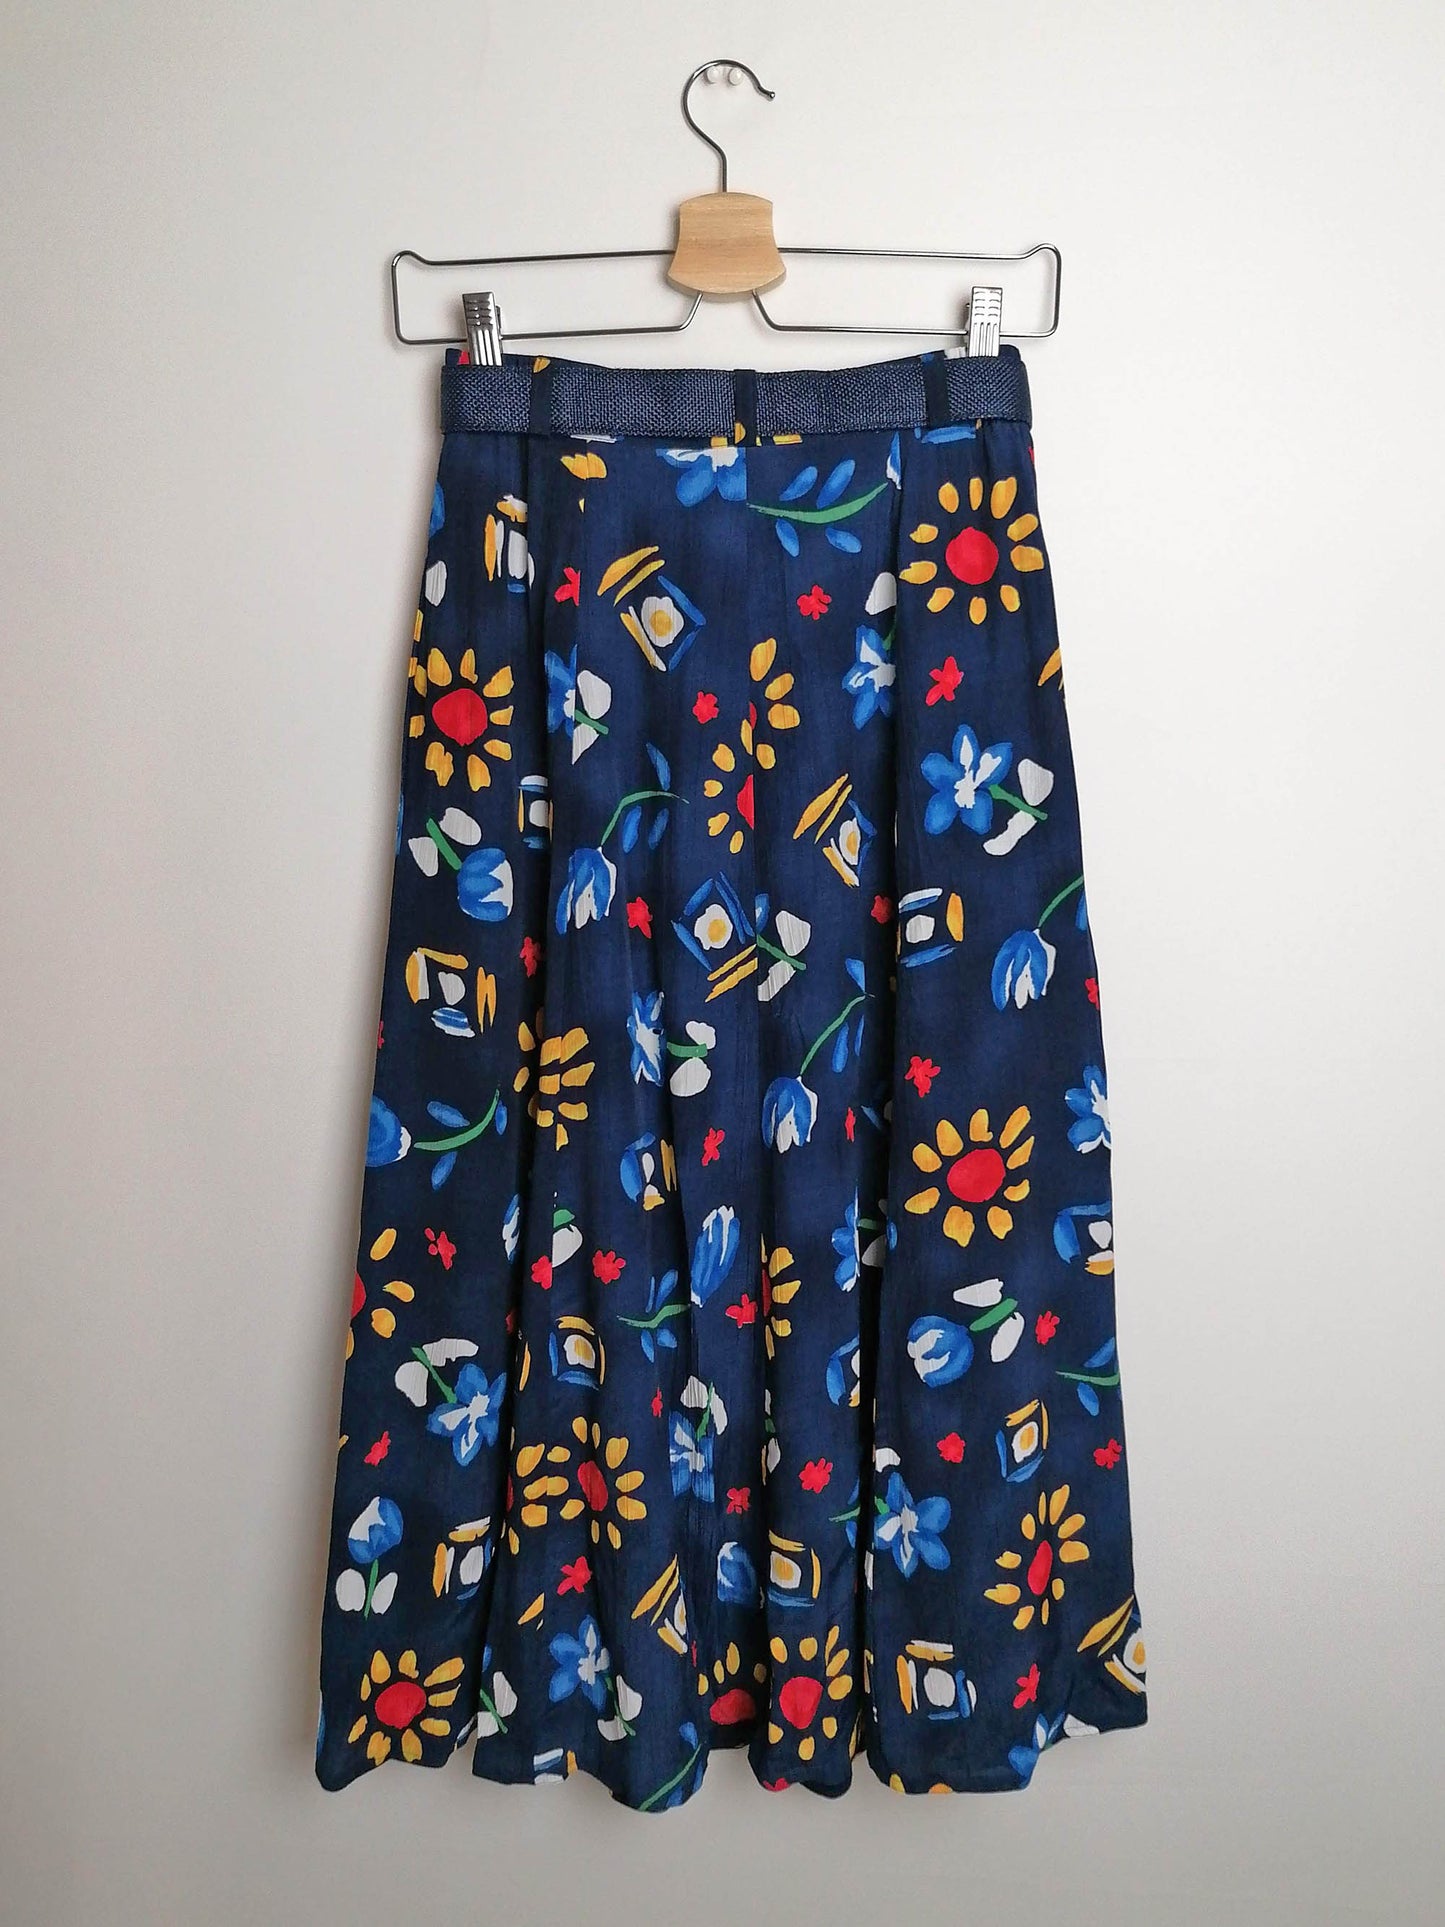 90's ERFO High Waist Skirt Floral print - size S / 36